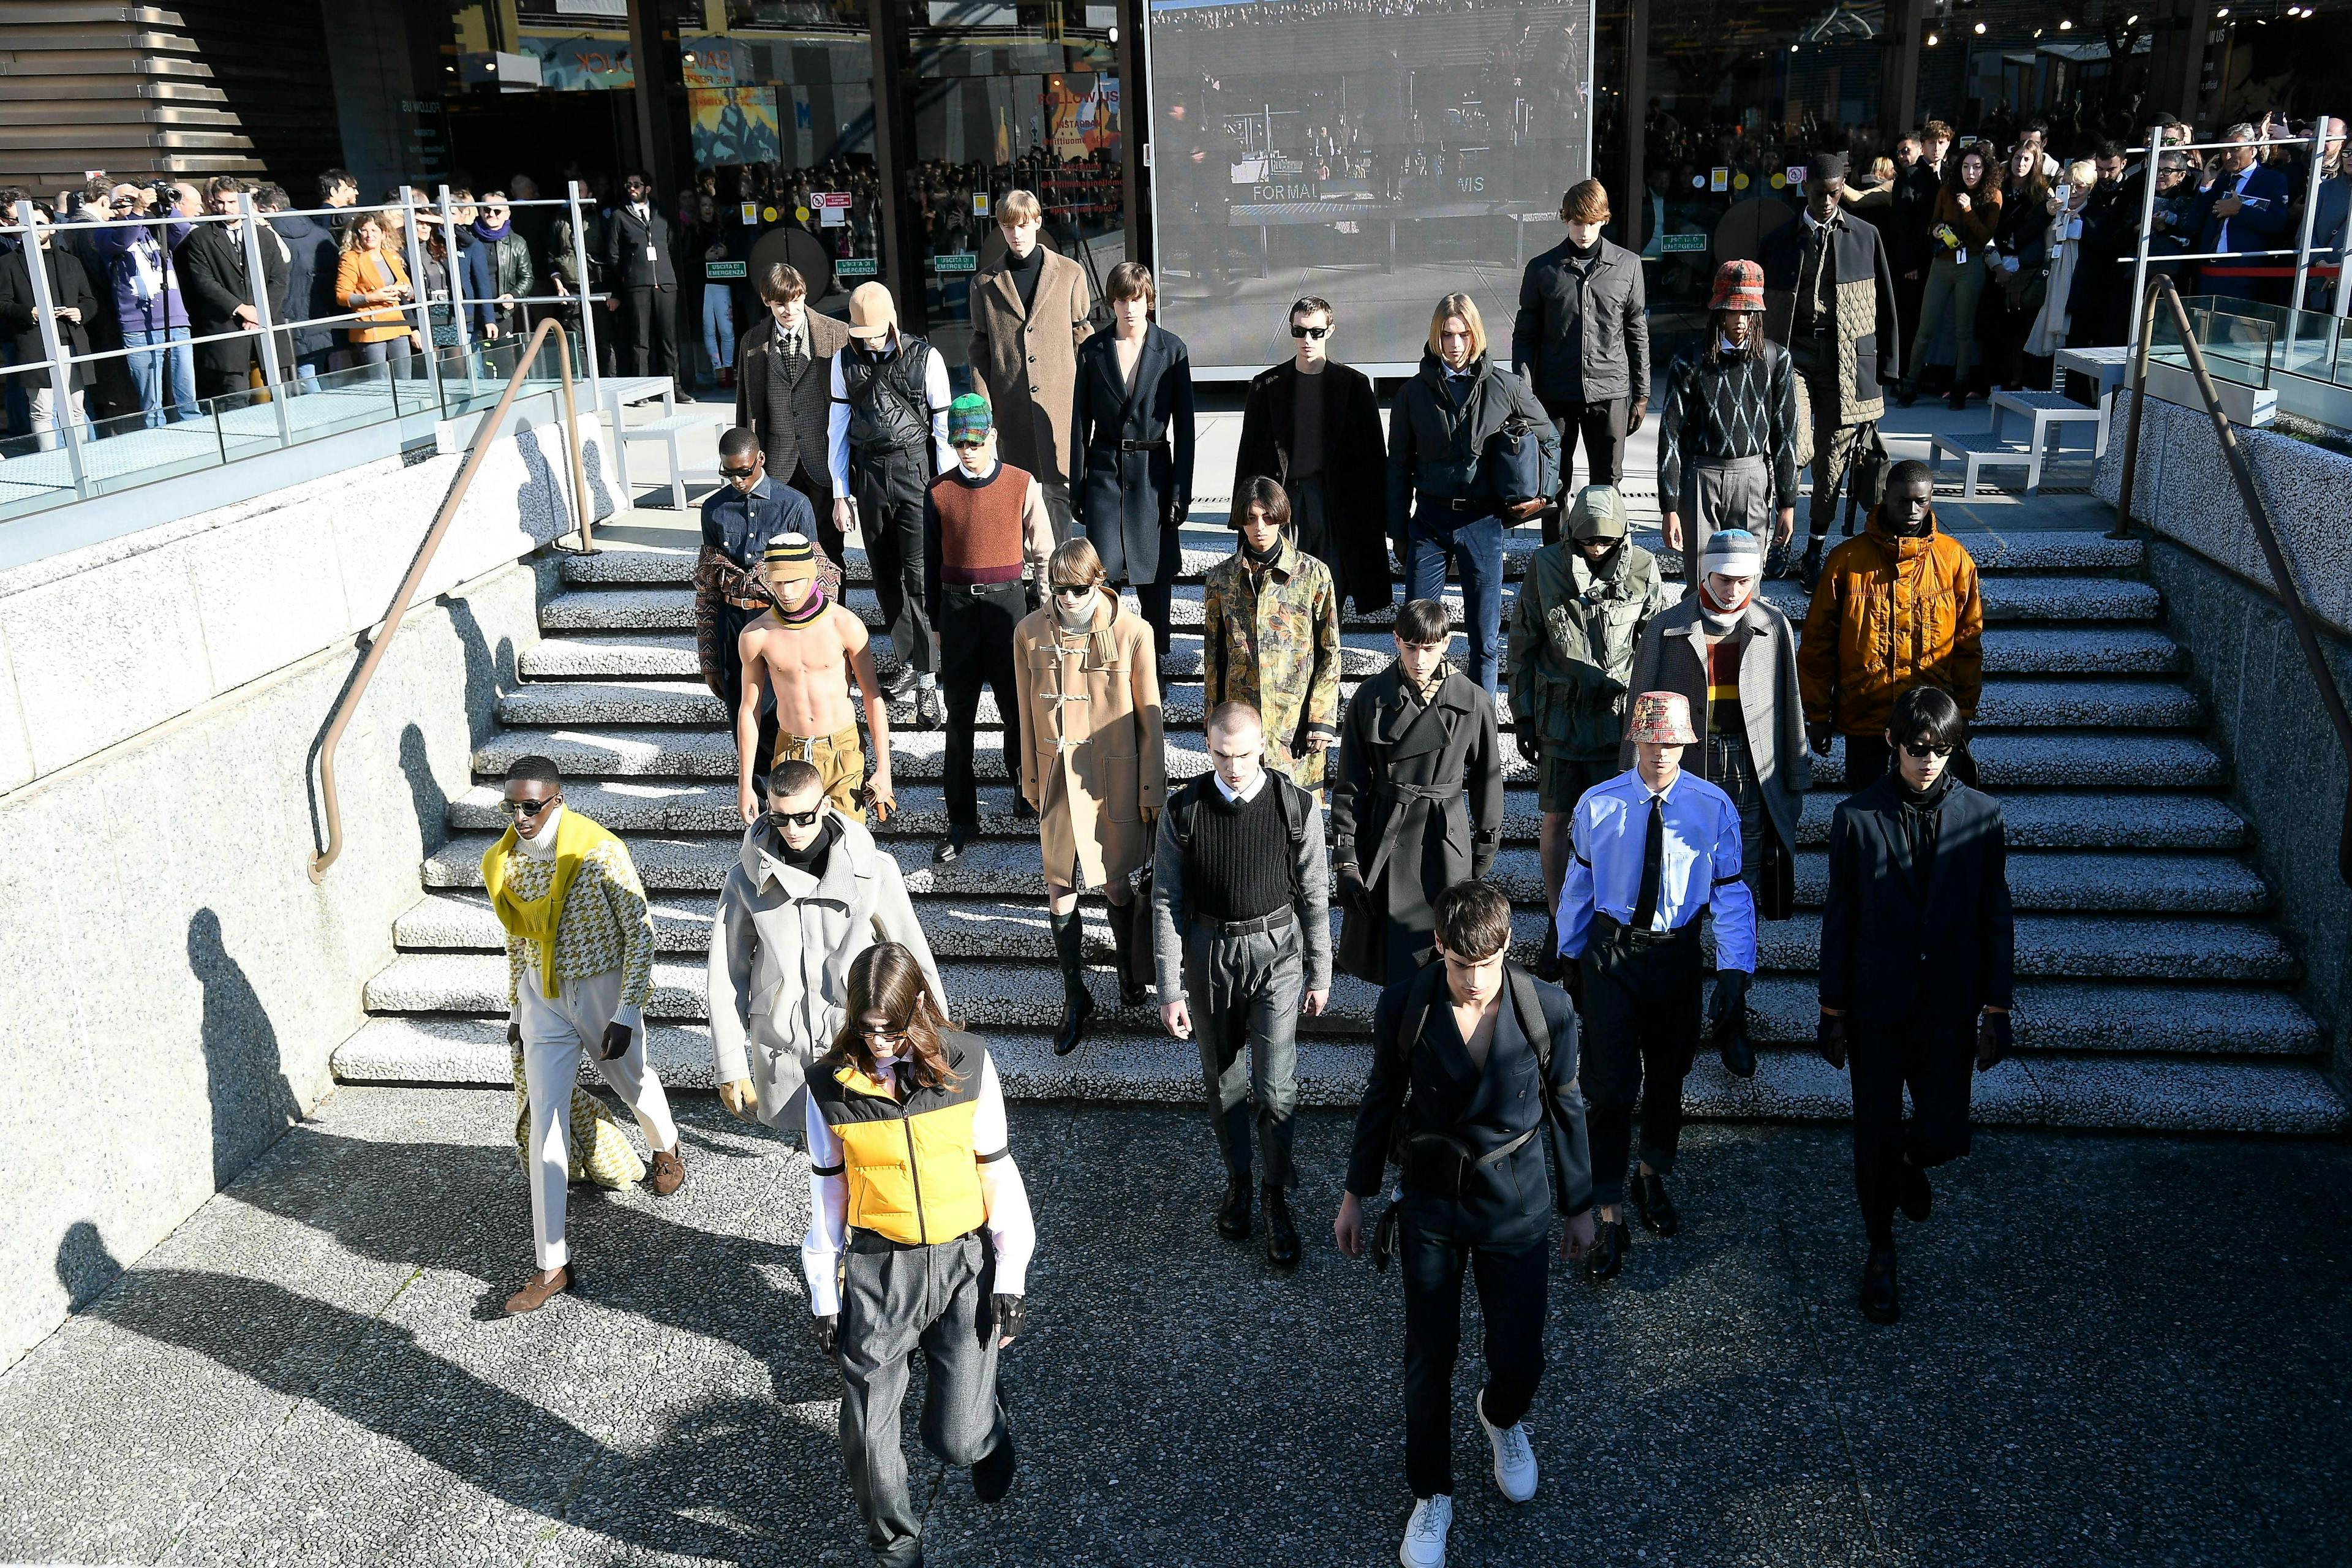 pedestrian person human clothing apparel tarmac overcoat coat suit crowd